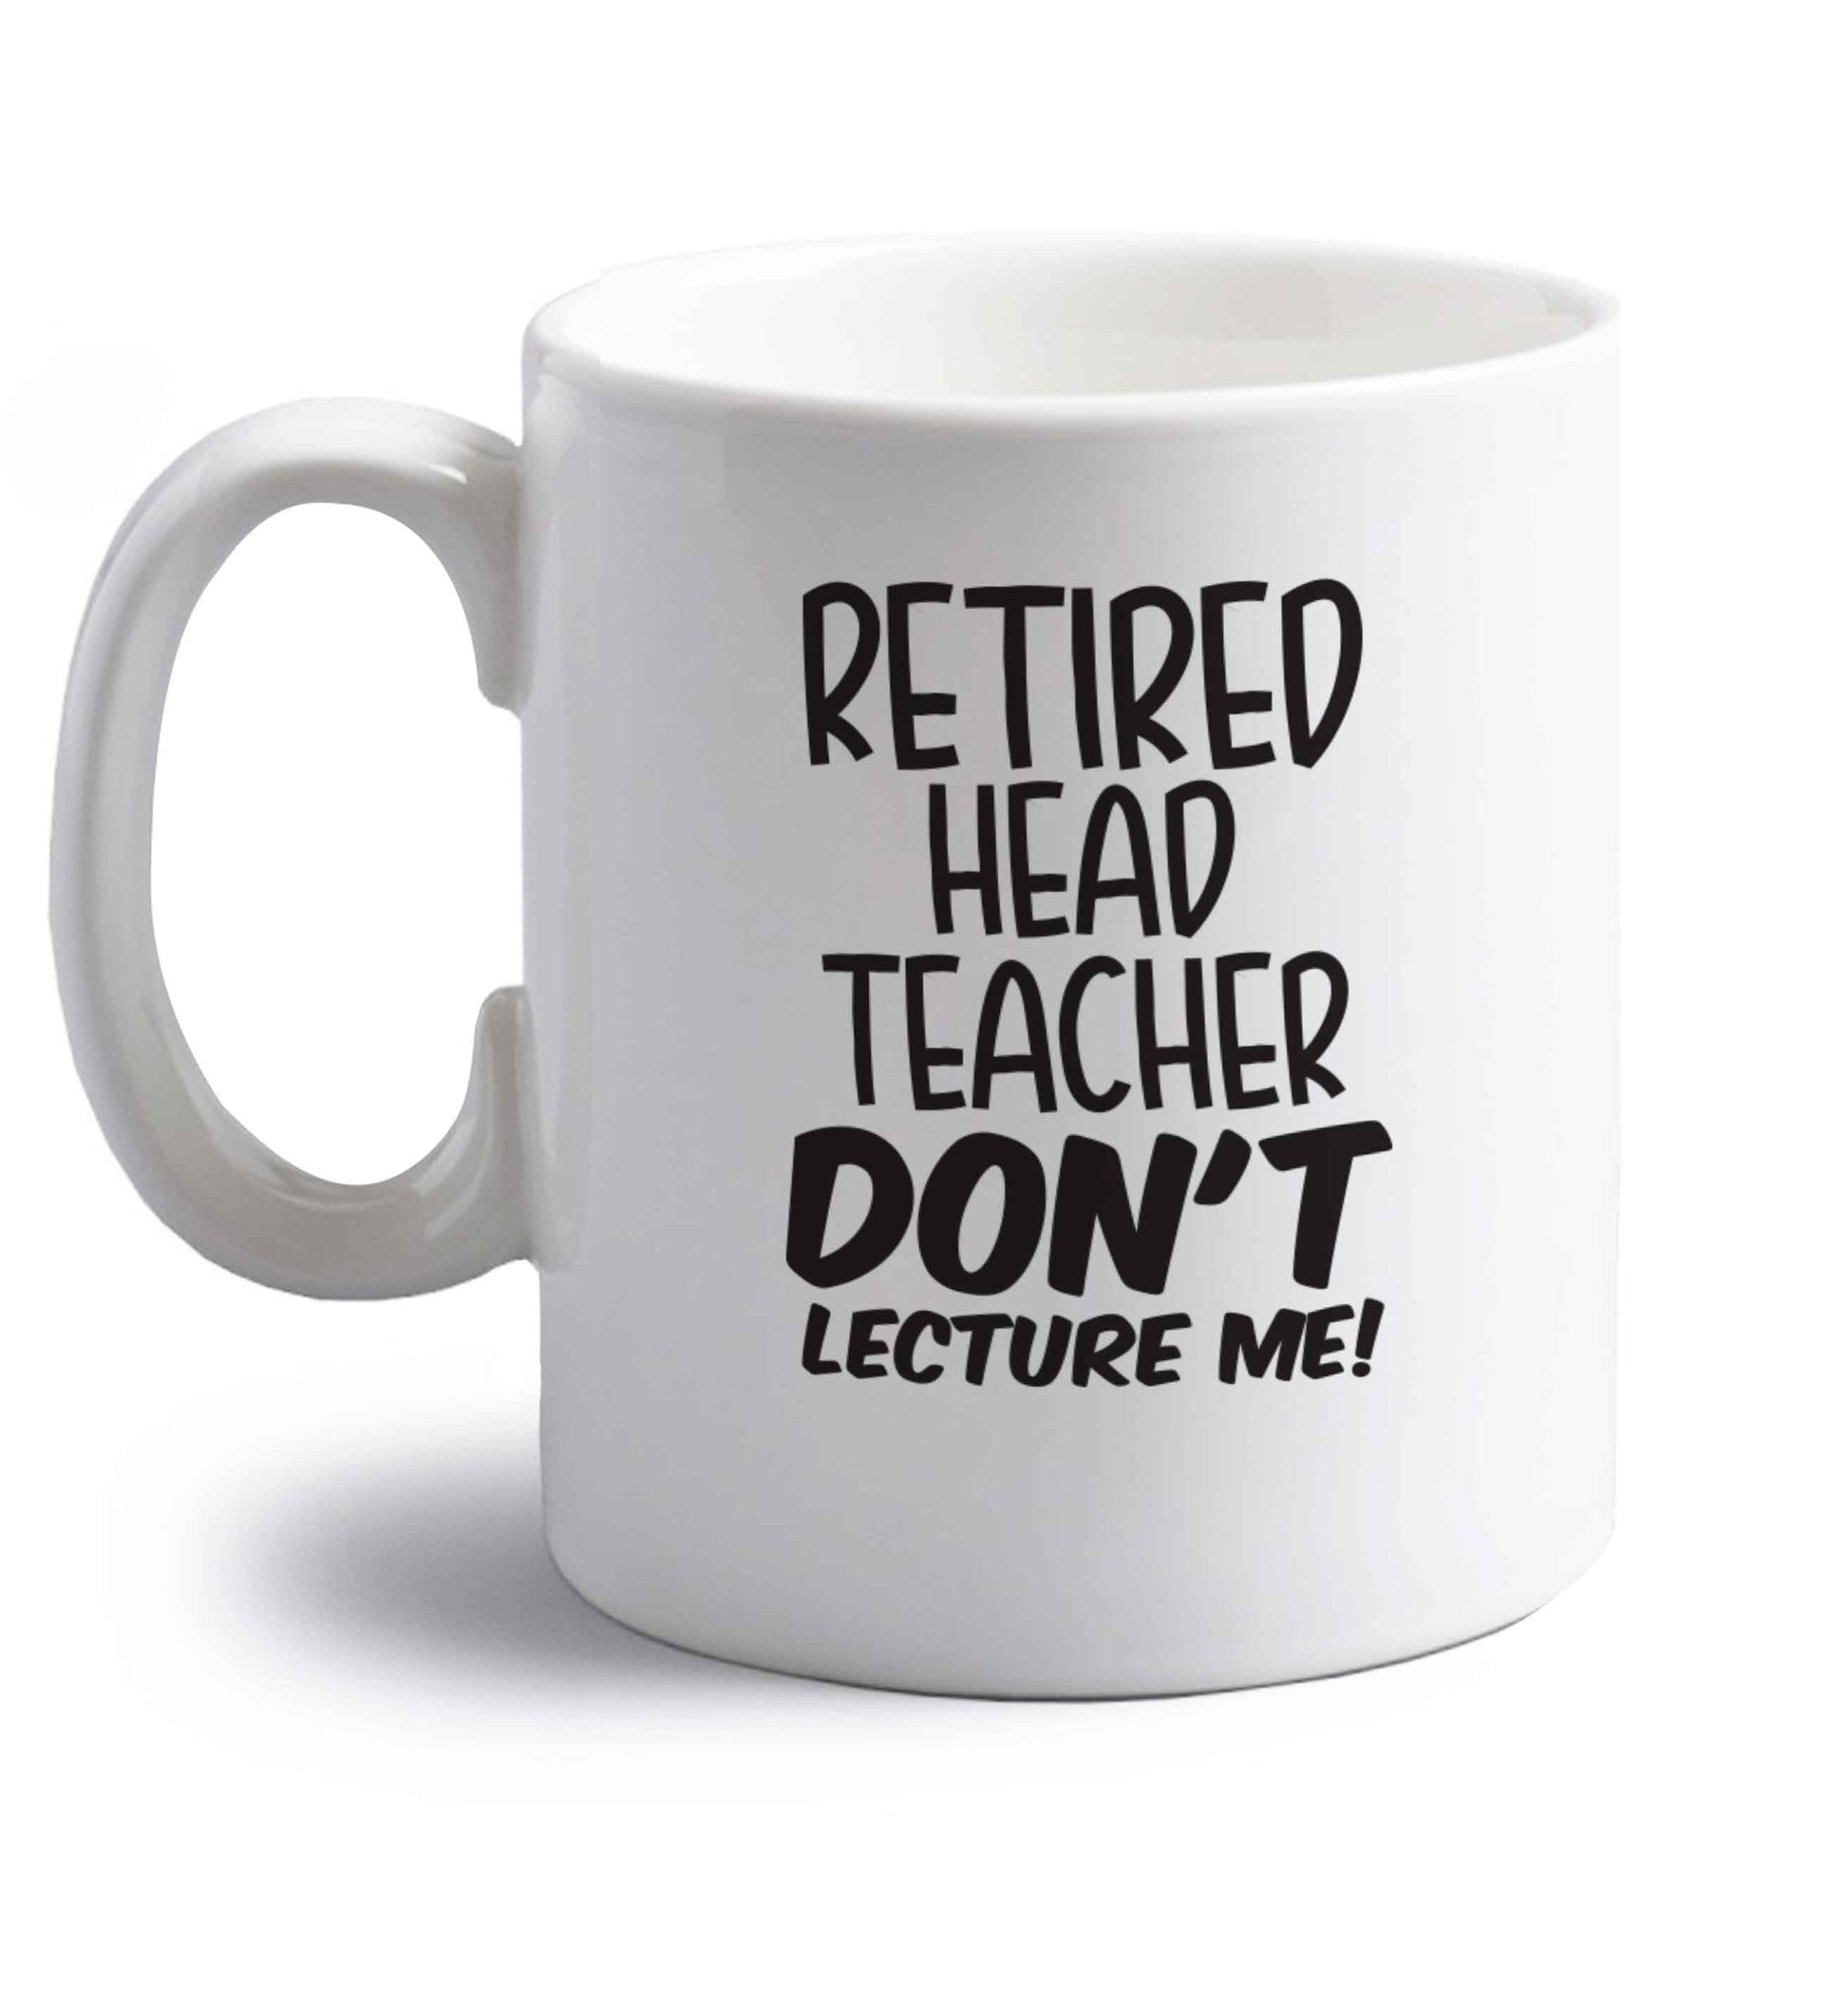 Retired head teacher don't lecture me! right handed white ceramic mug 